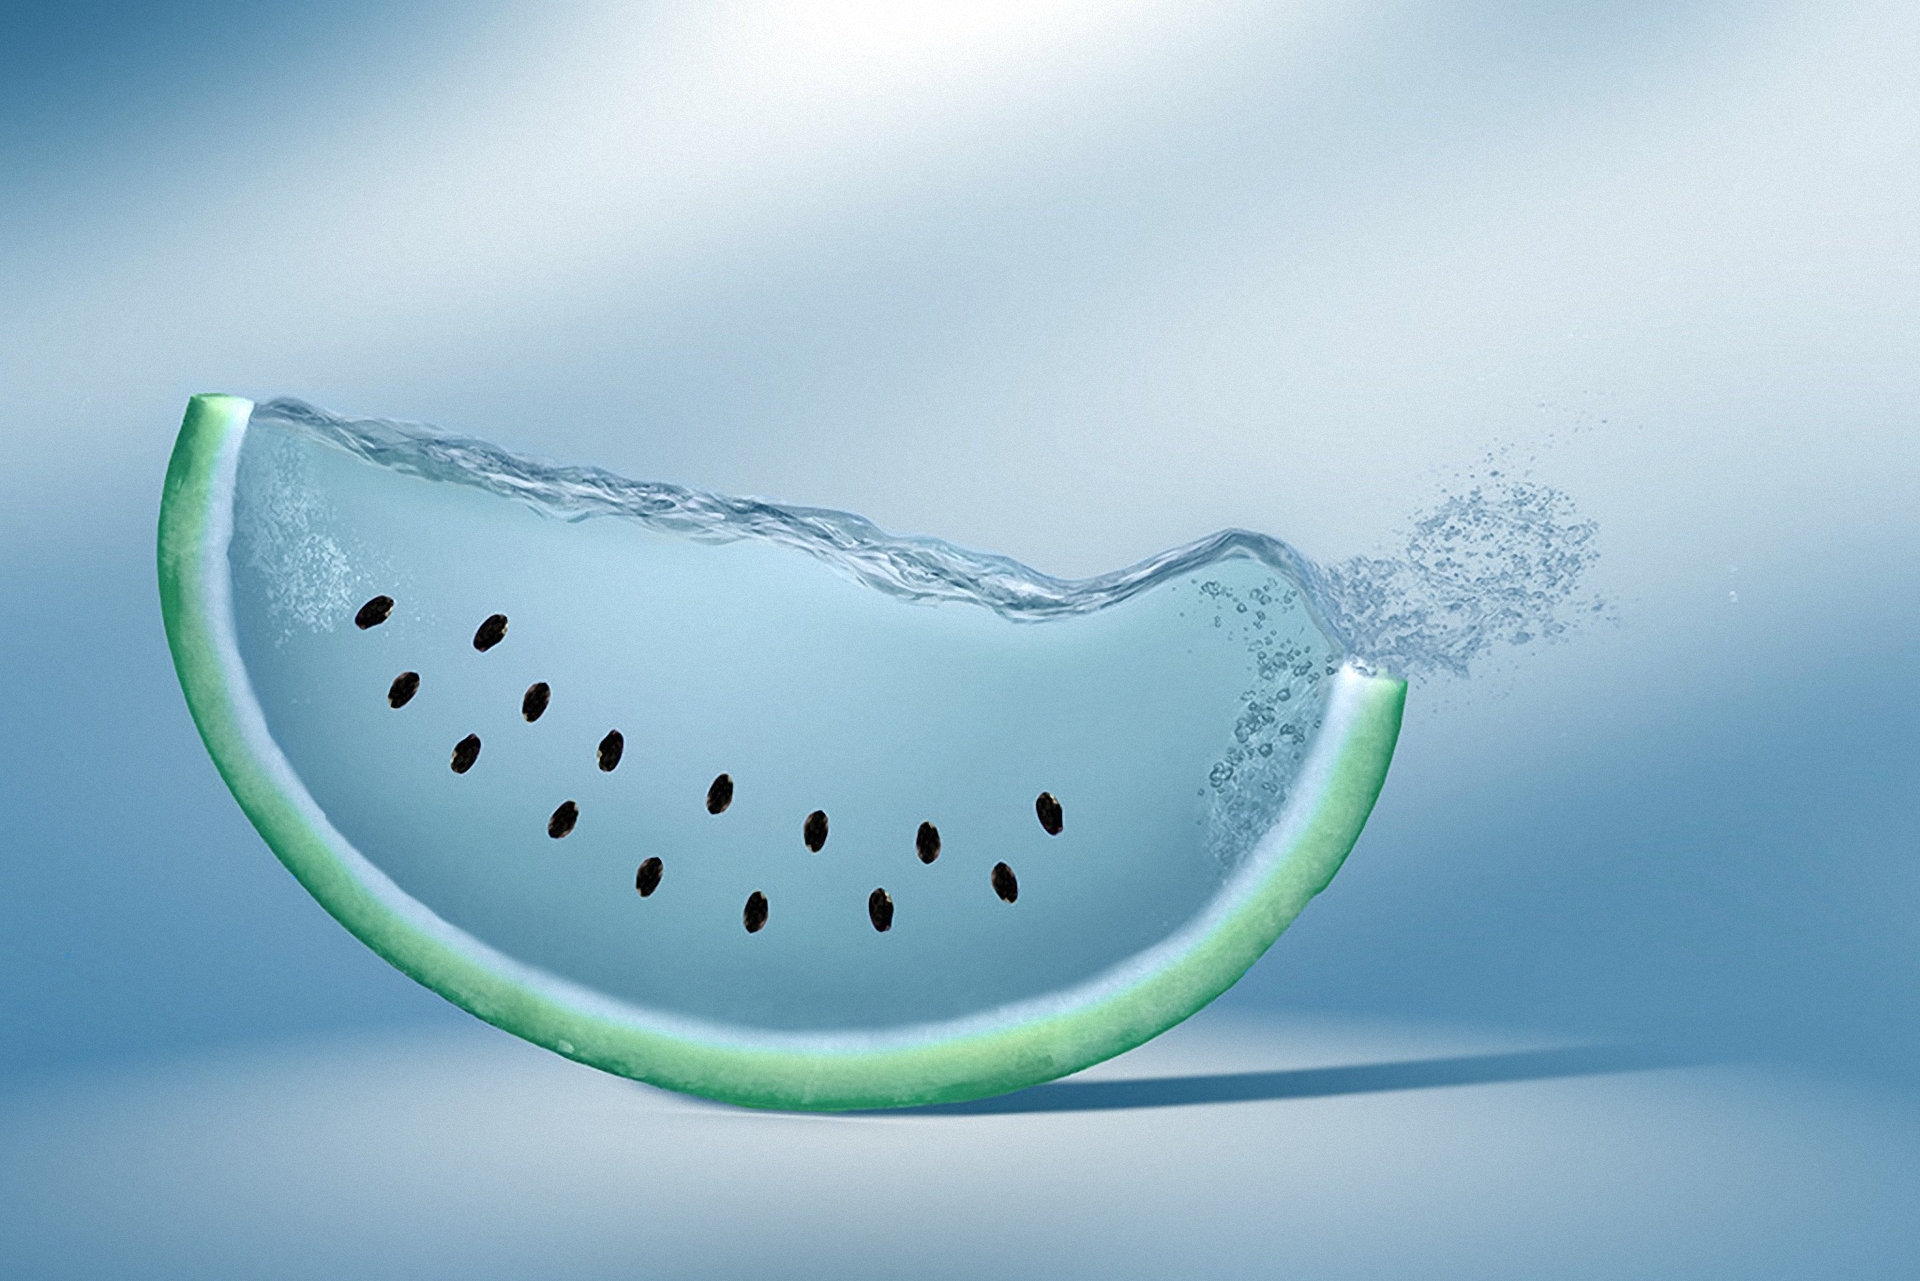 Watermelon Digital Art Water HD Wallpaper Creative Design